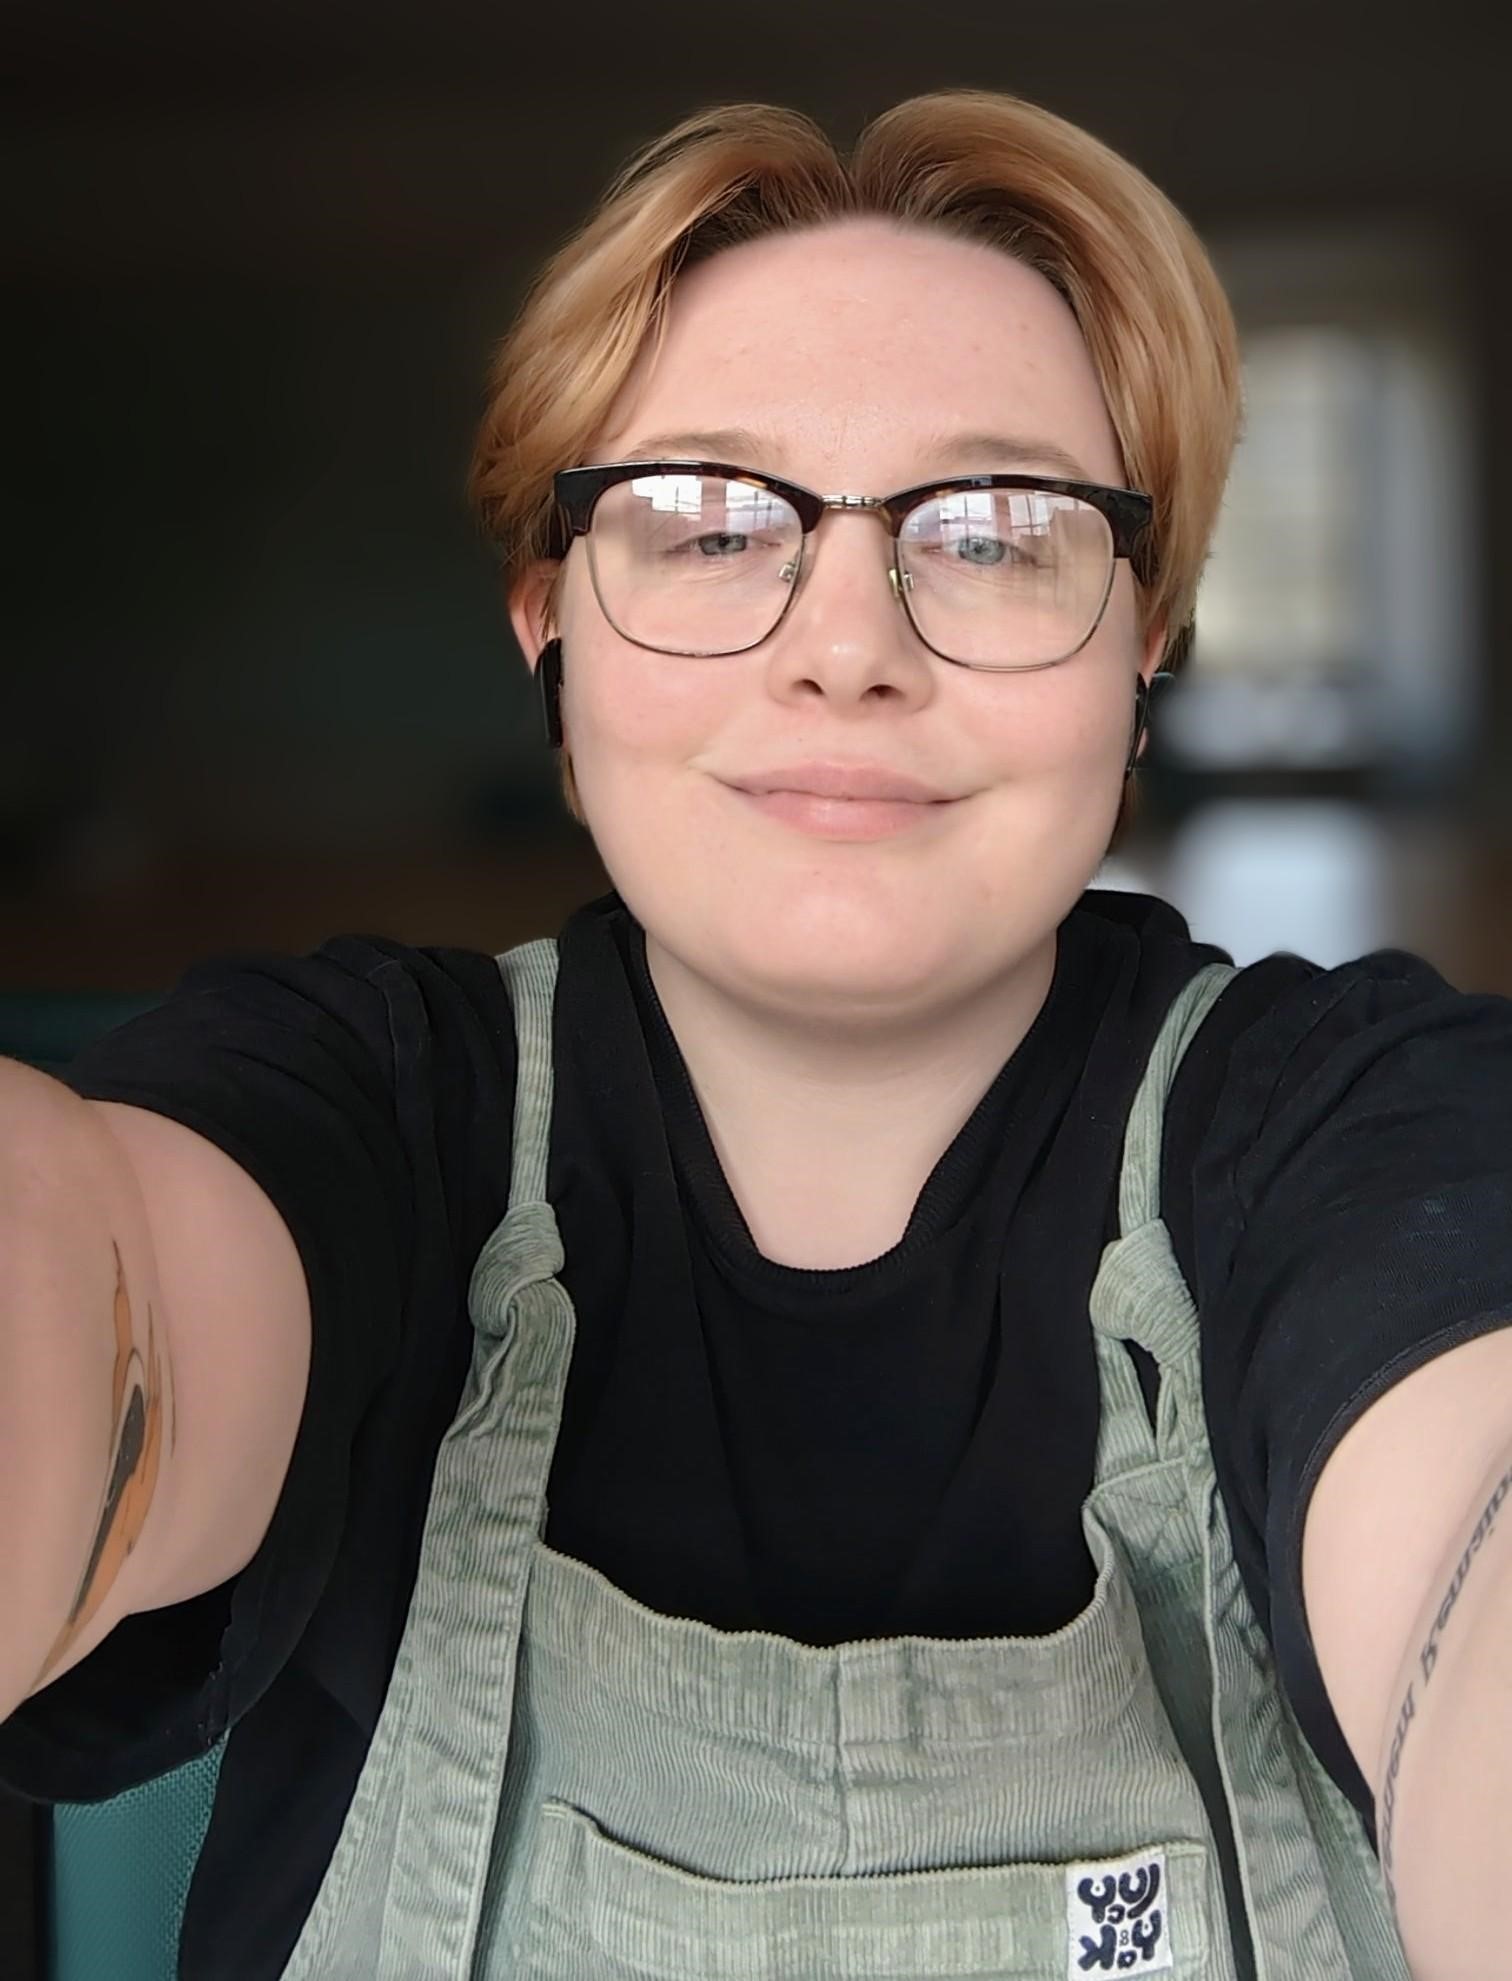 Image of non-binary intern smiling